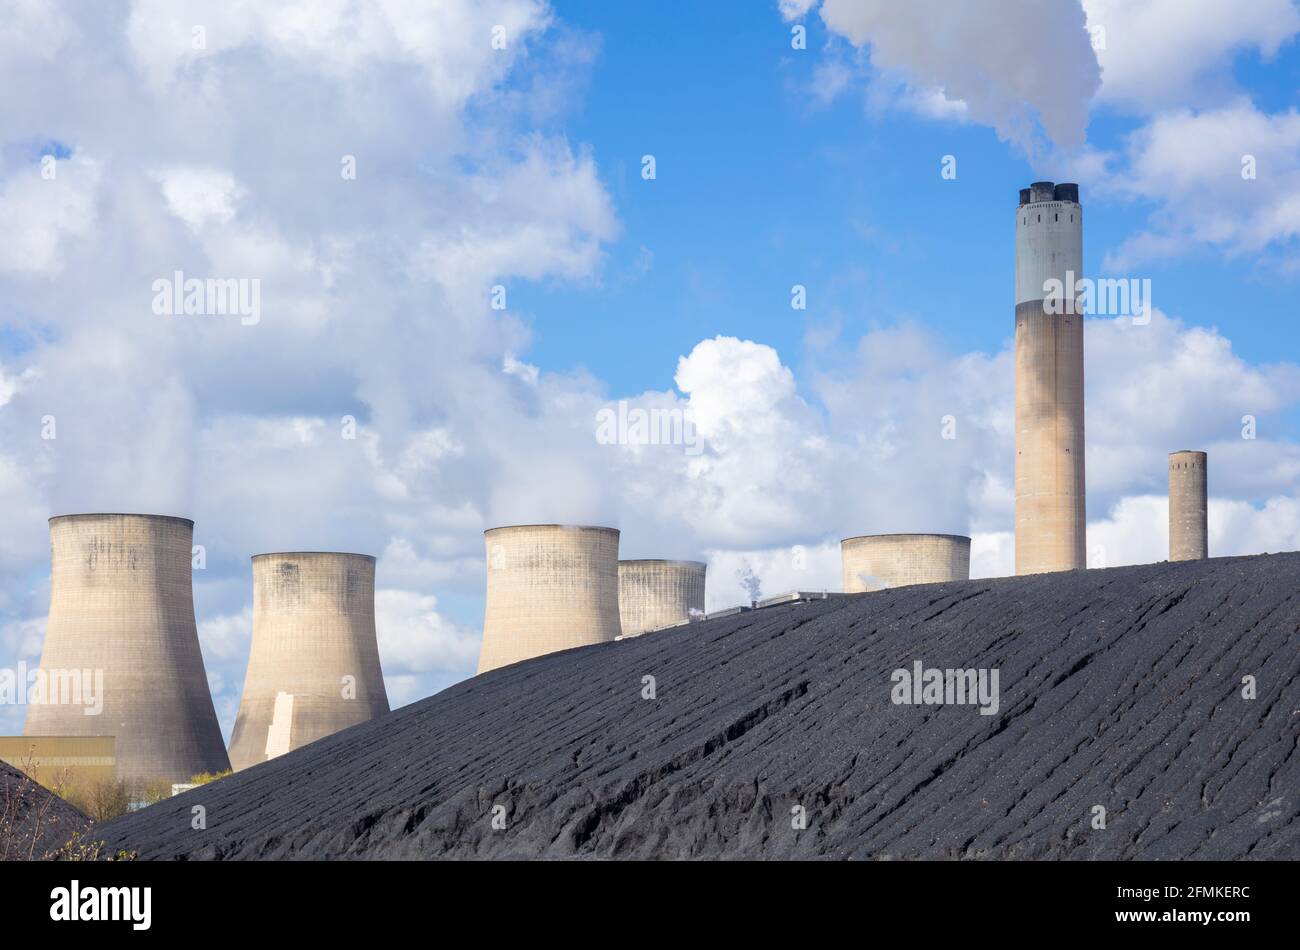 Kohlekraftwerk Ratcliffe-on-Soar mit Dampf aus den Kühltürmen Mit einem Kohlehaufen Ratcliffe auf Soar Nottinghamshire England Großbritannien GB Europa Stockfoto